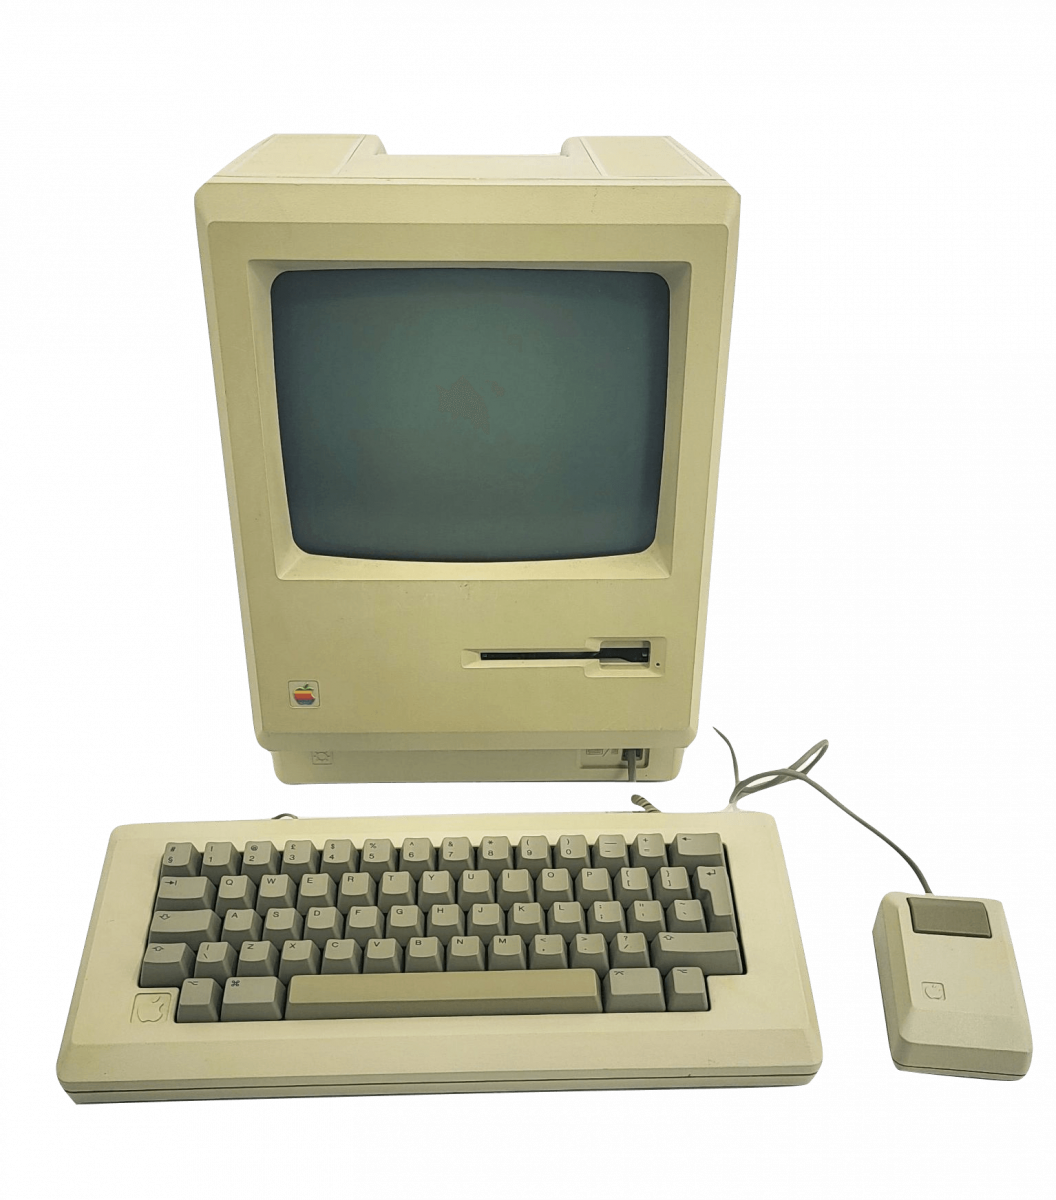 The Apple Macintosh home personal computer.